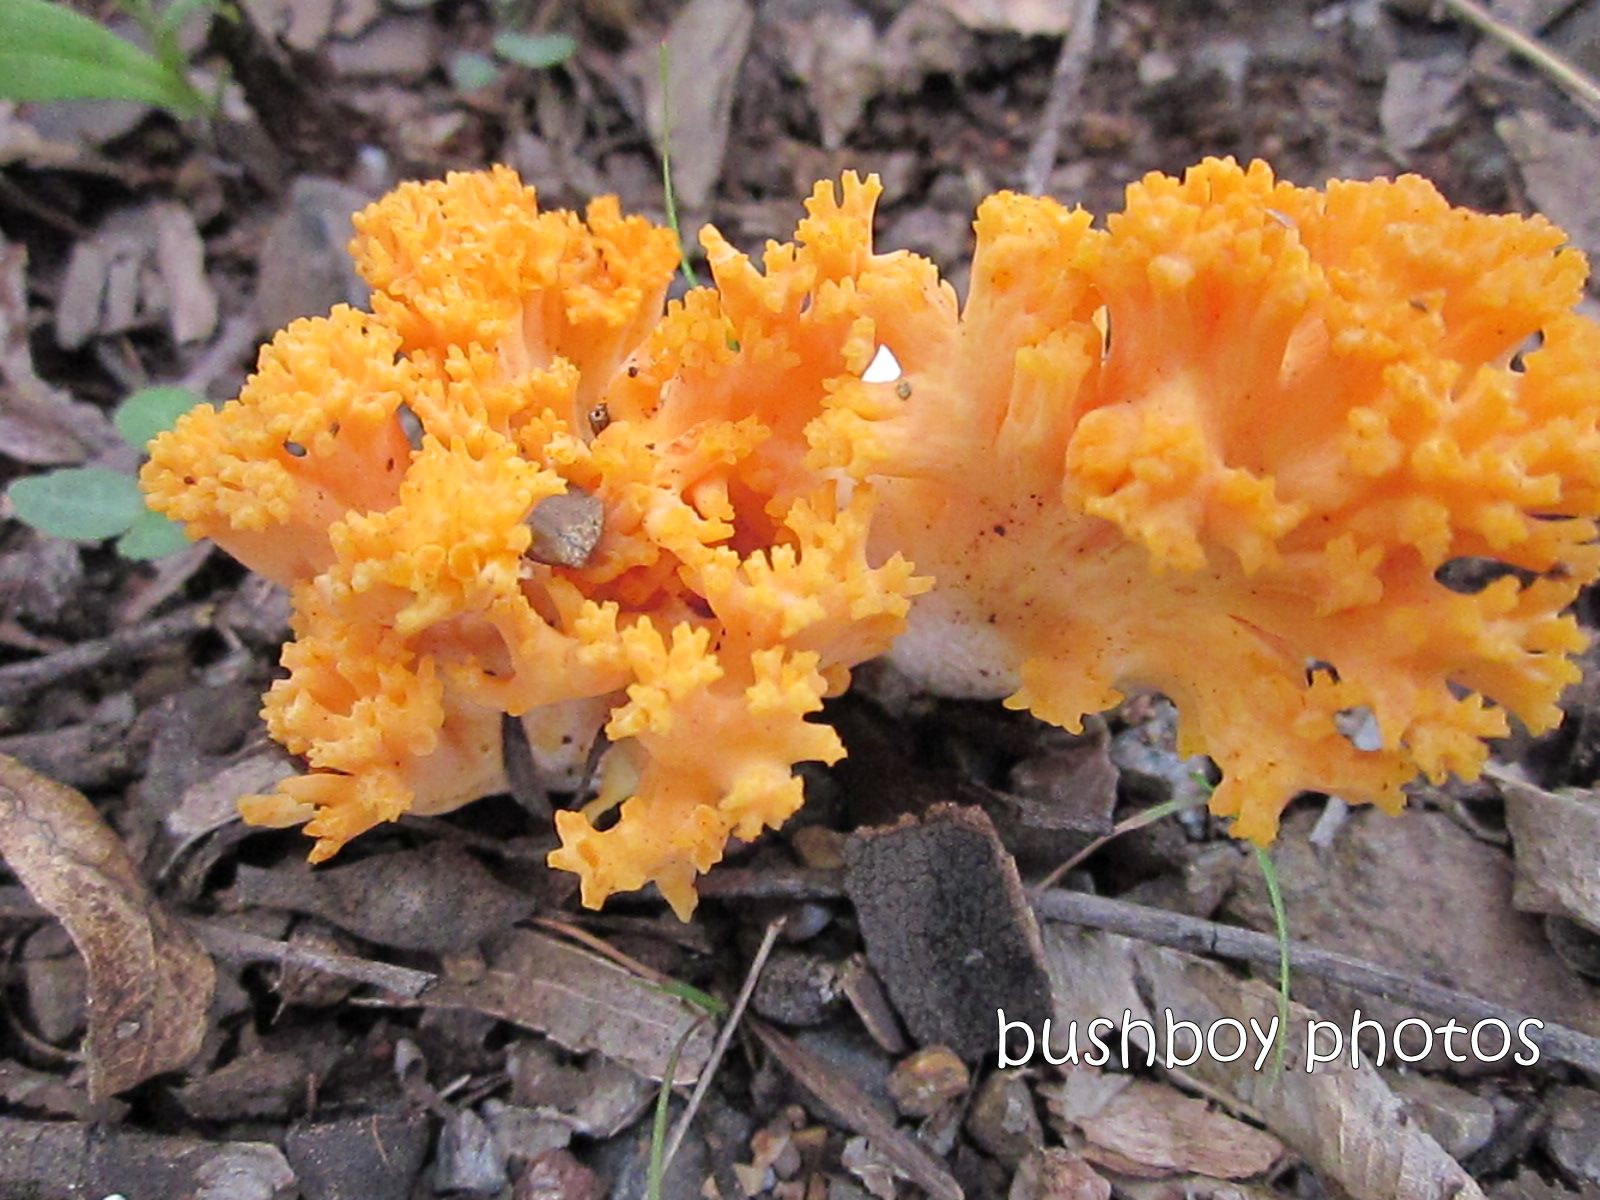 fungus_orange_home_march 2013